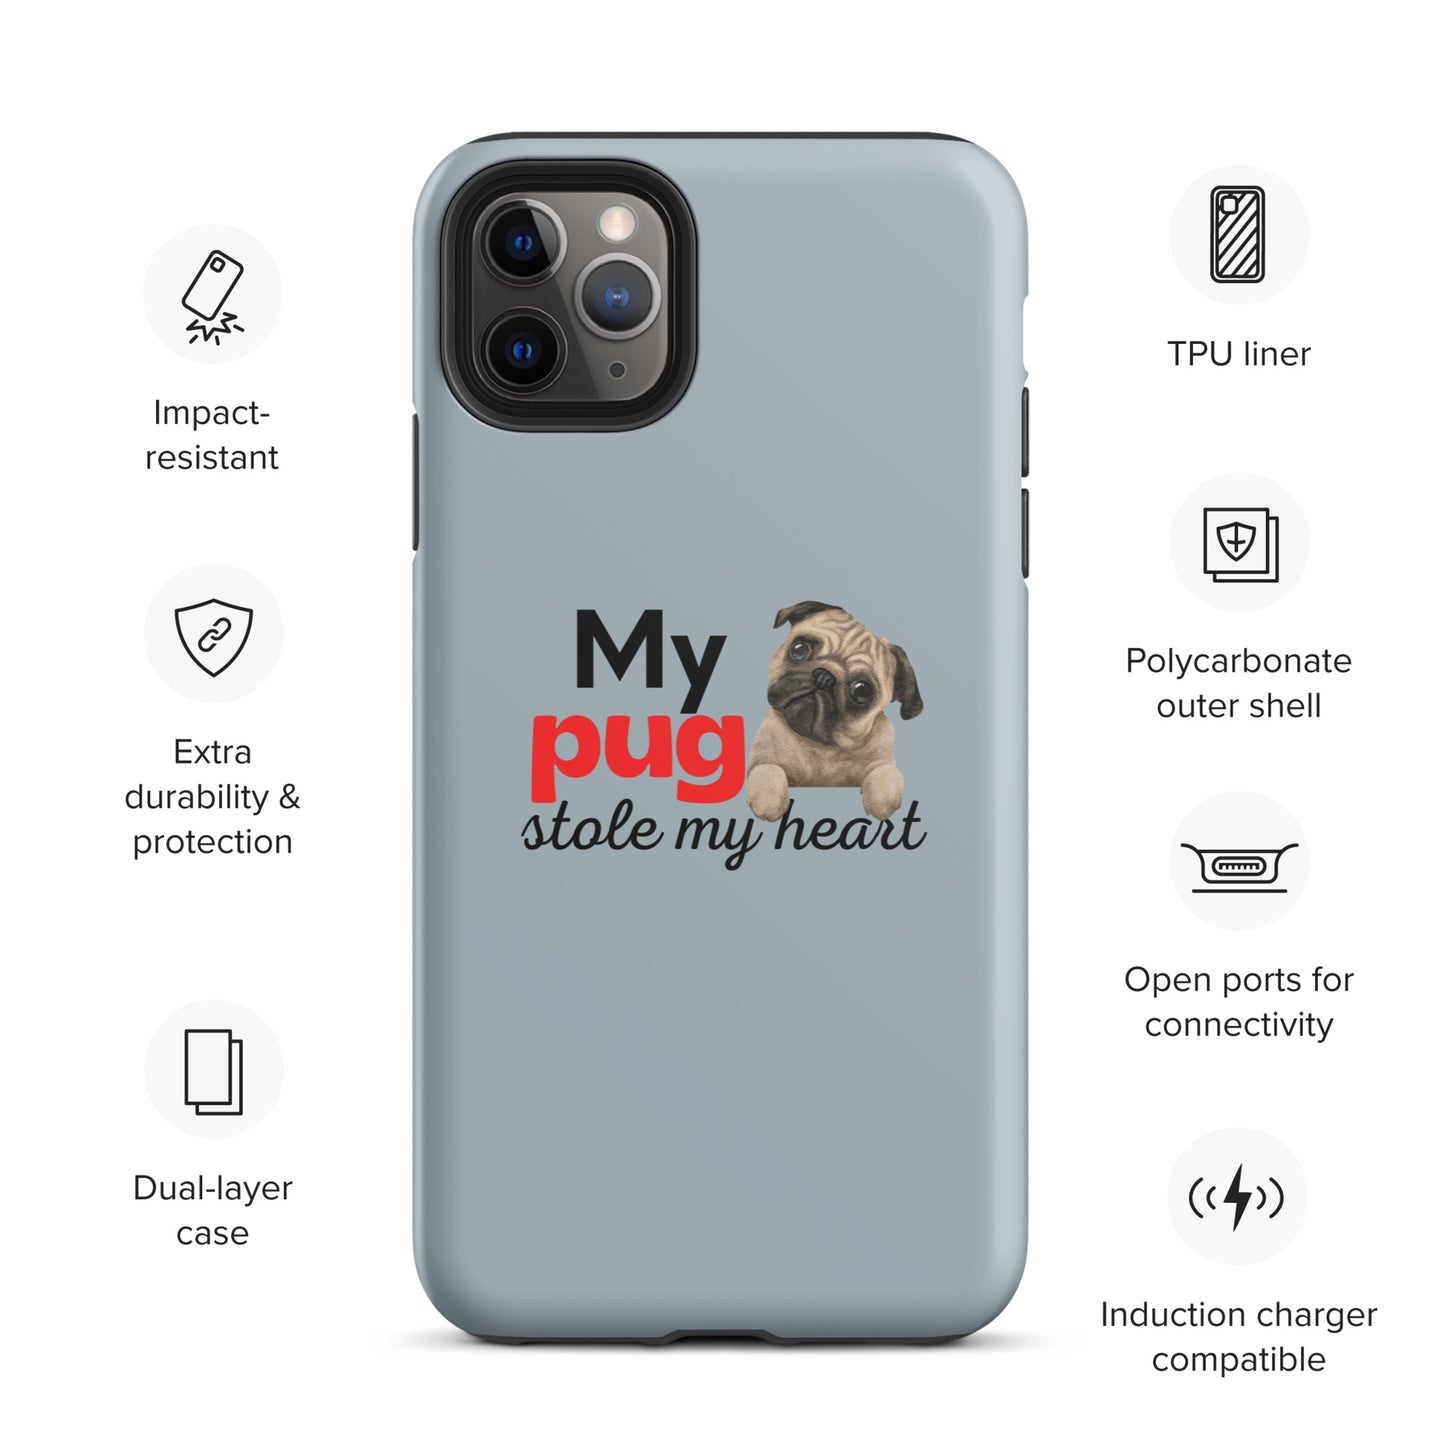 iPhone Case 'My Pug stole my heart' Grey